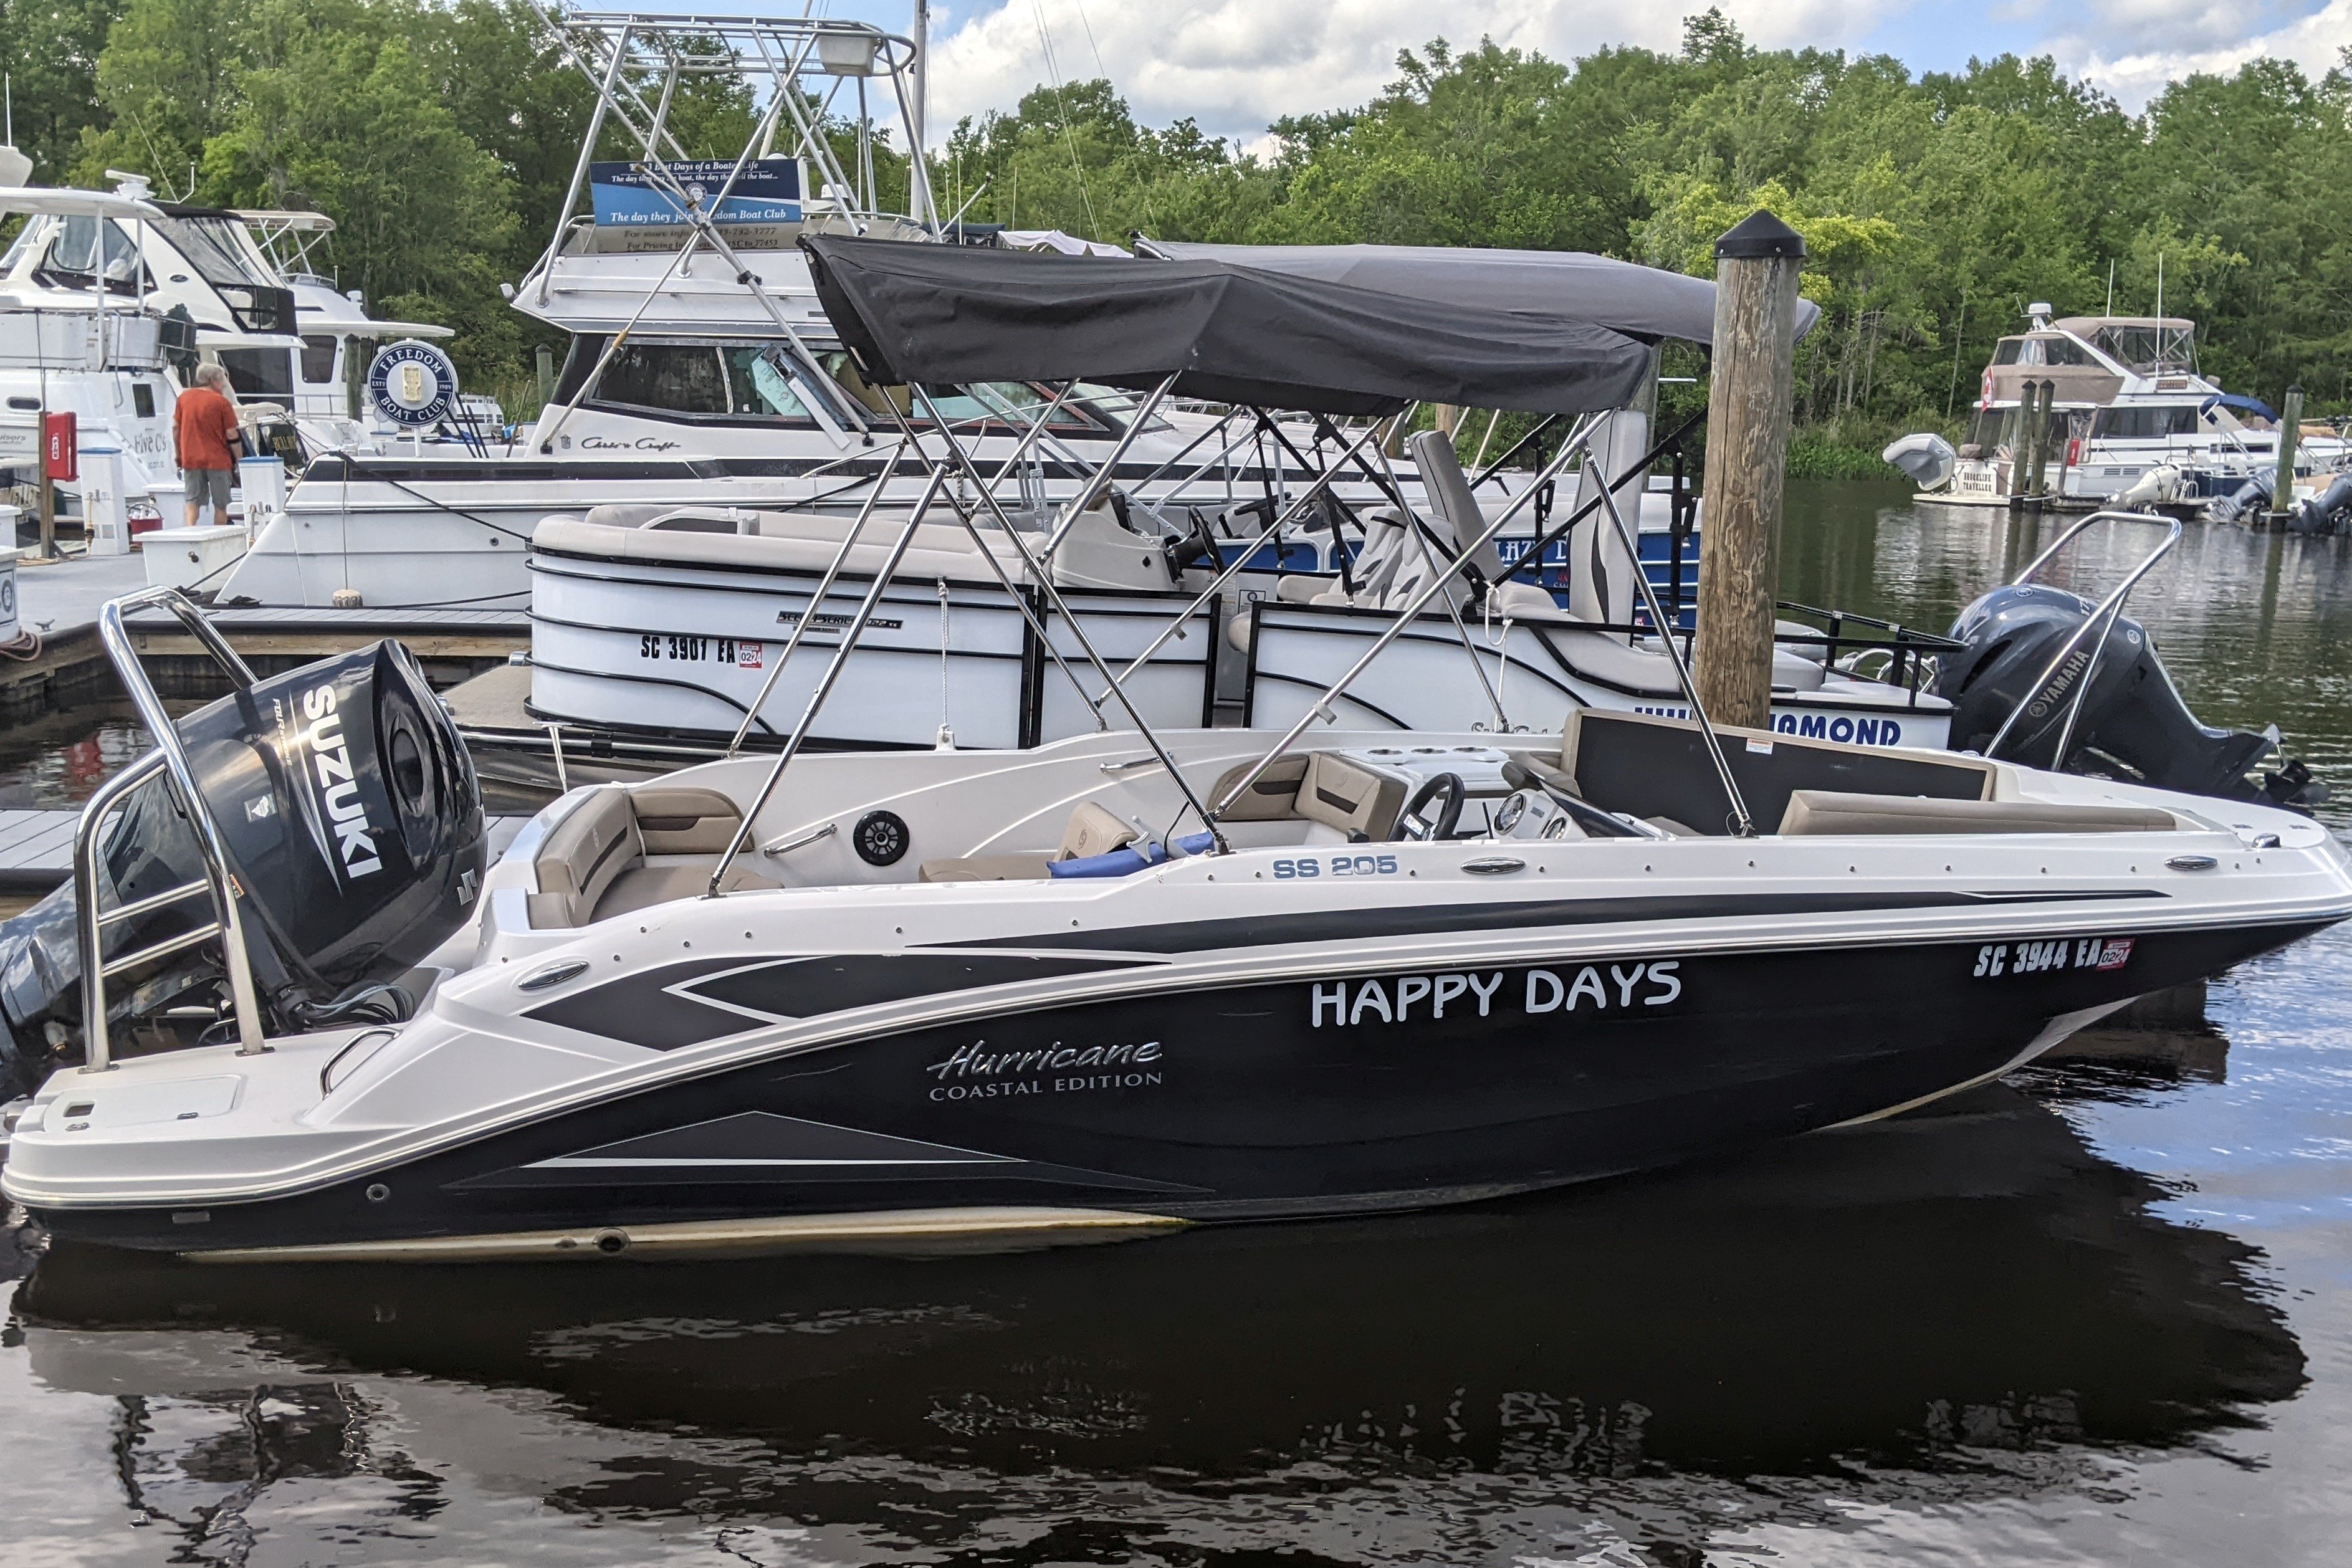 HAPPY DAYS - NO FISHING - Deck Boat